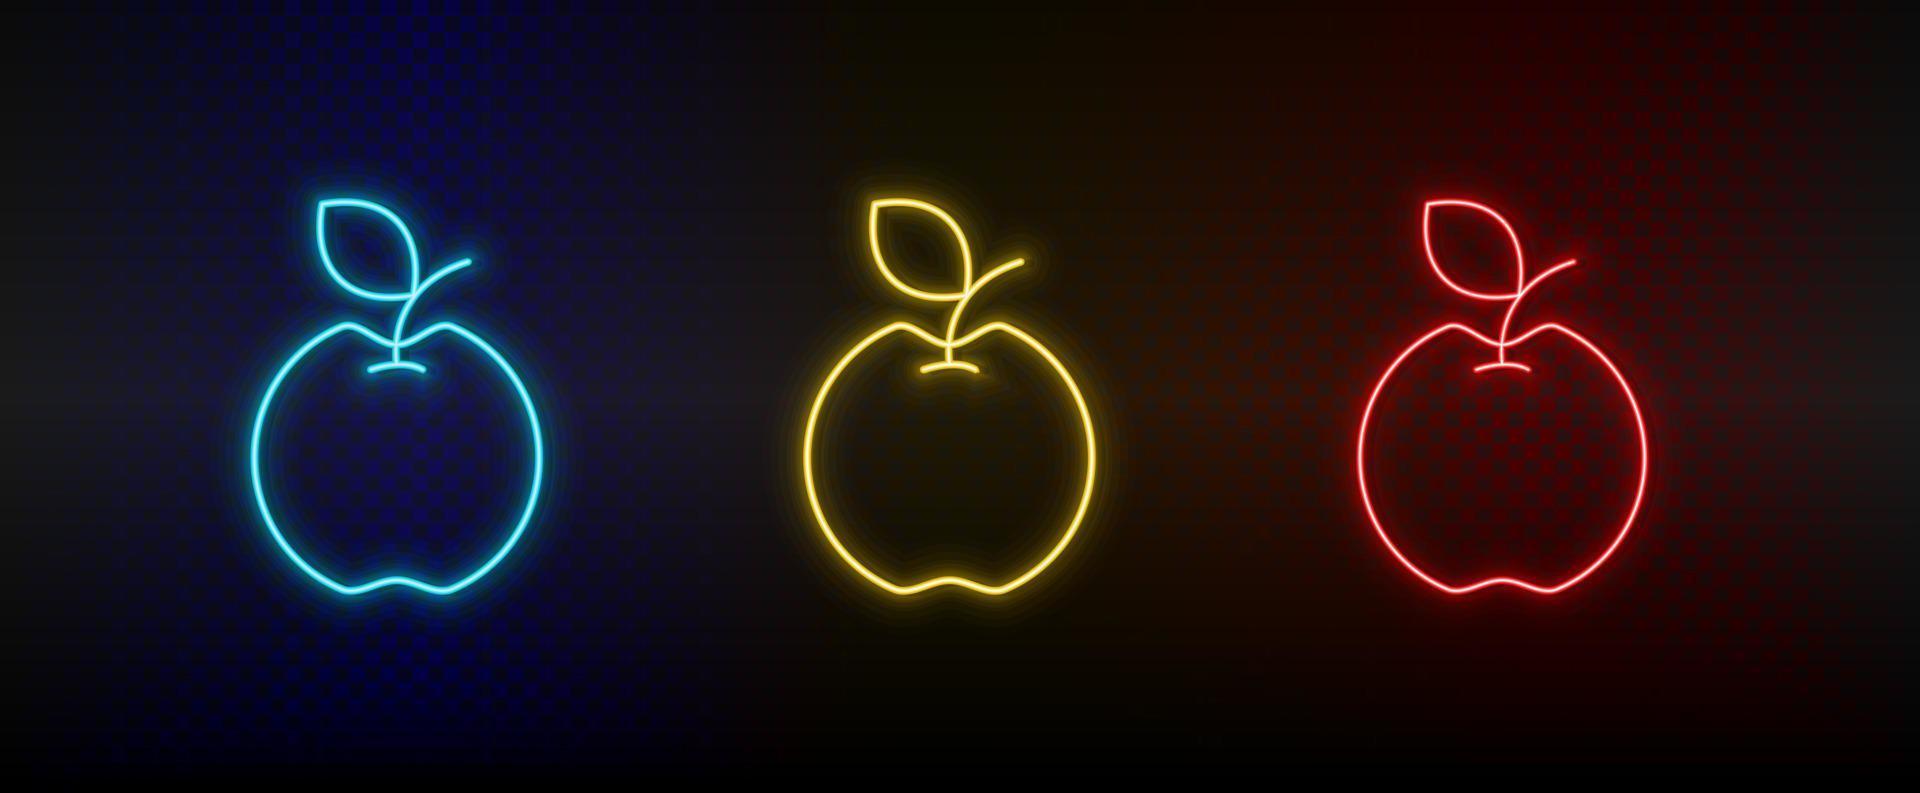 Neon icon set apple. Set of red, blue, yellow neon vector icon on dark background